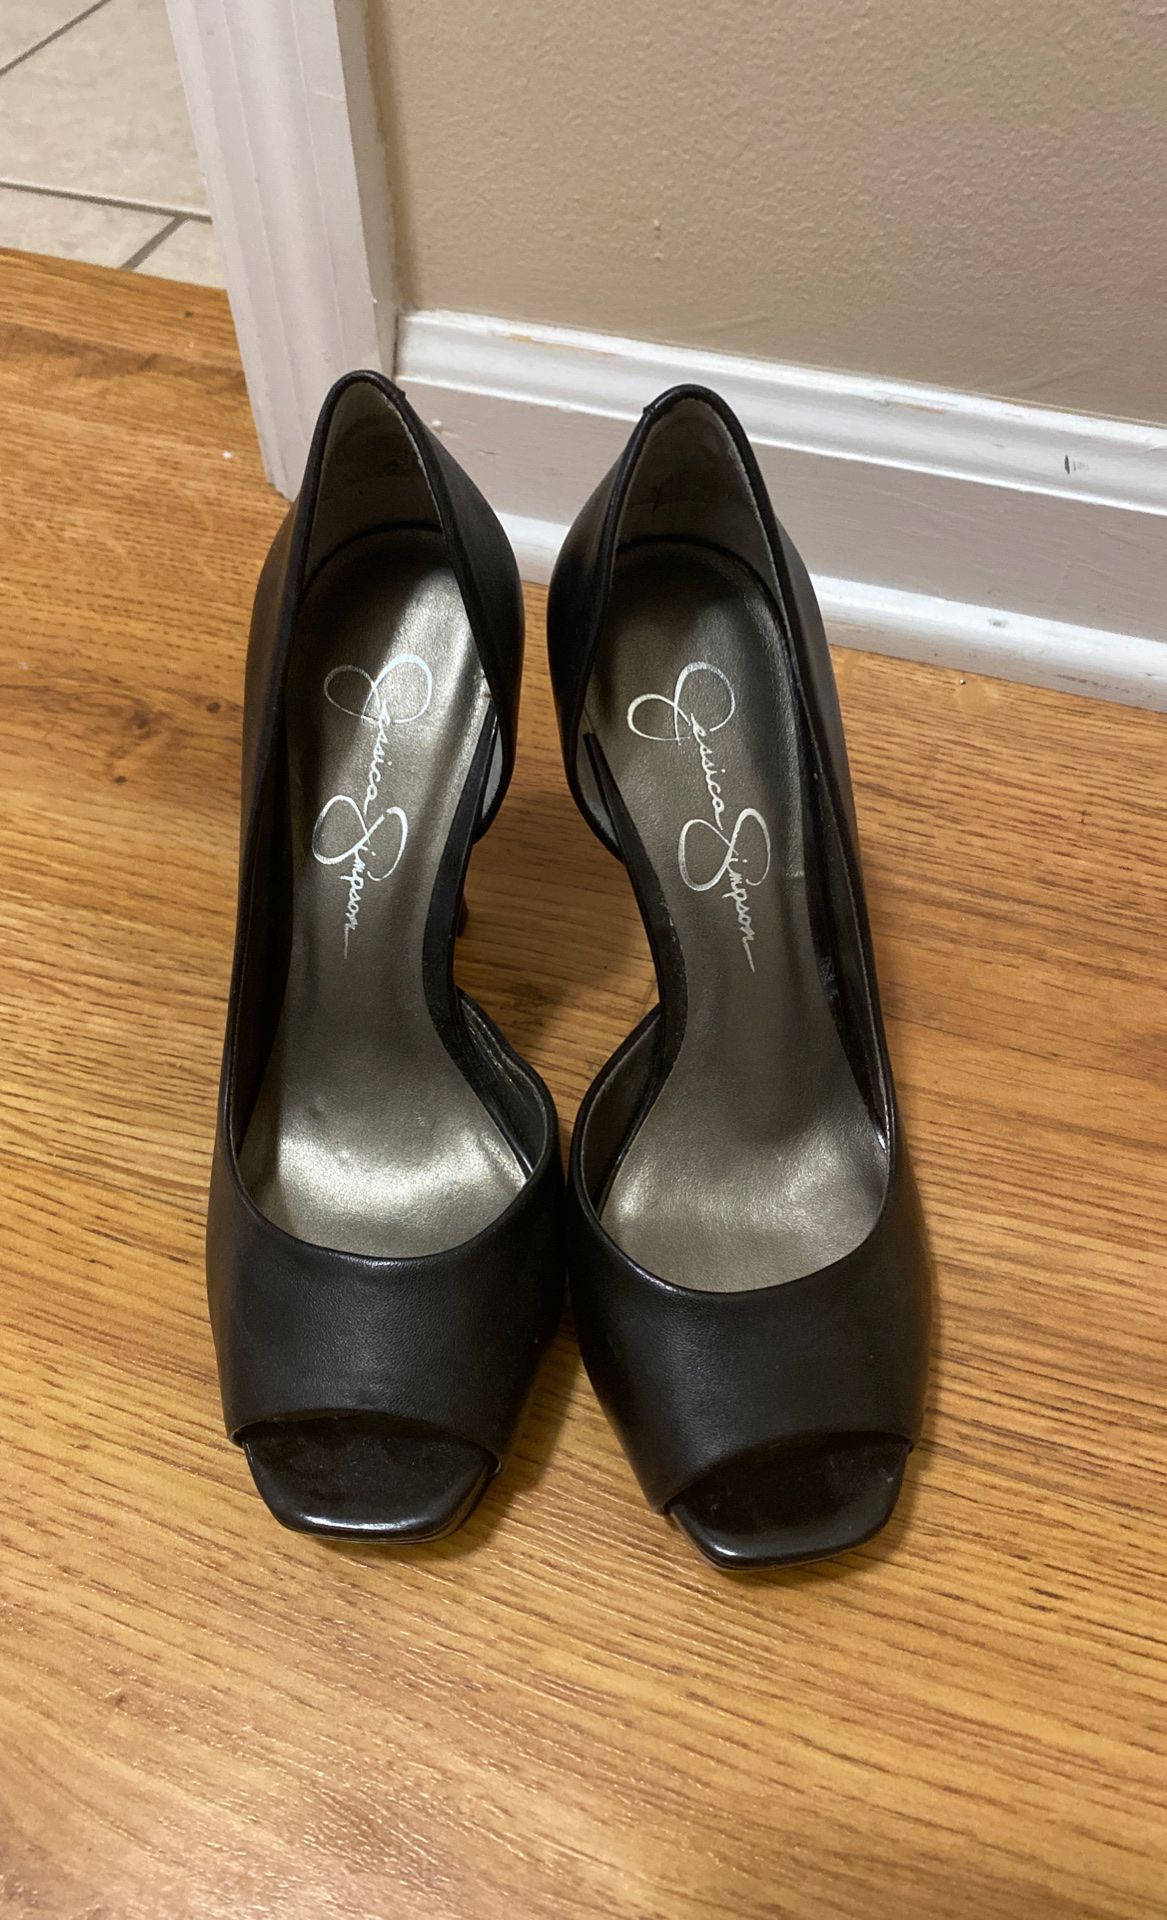 Jessica Simpson black heels